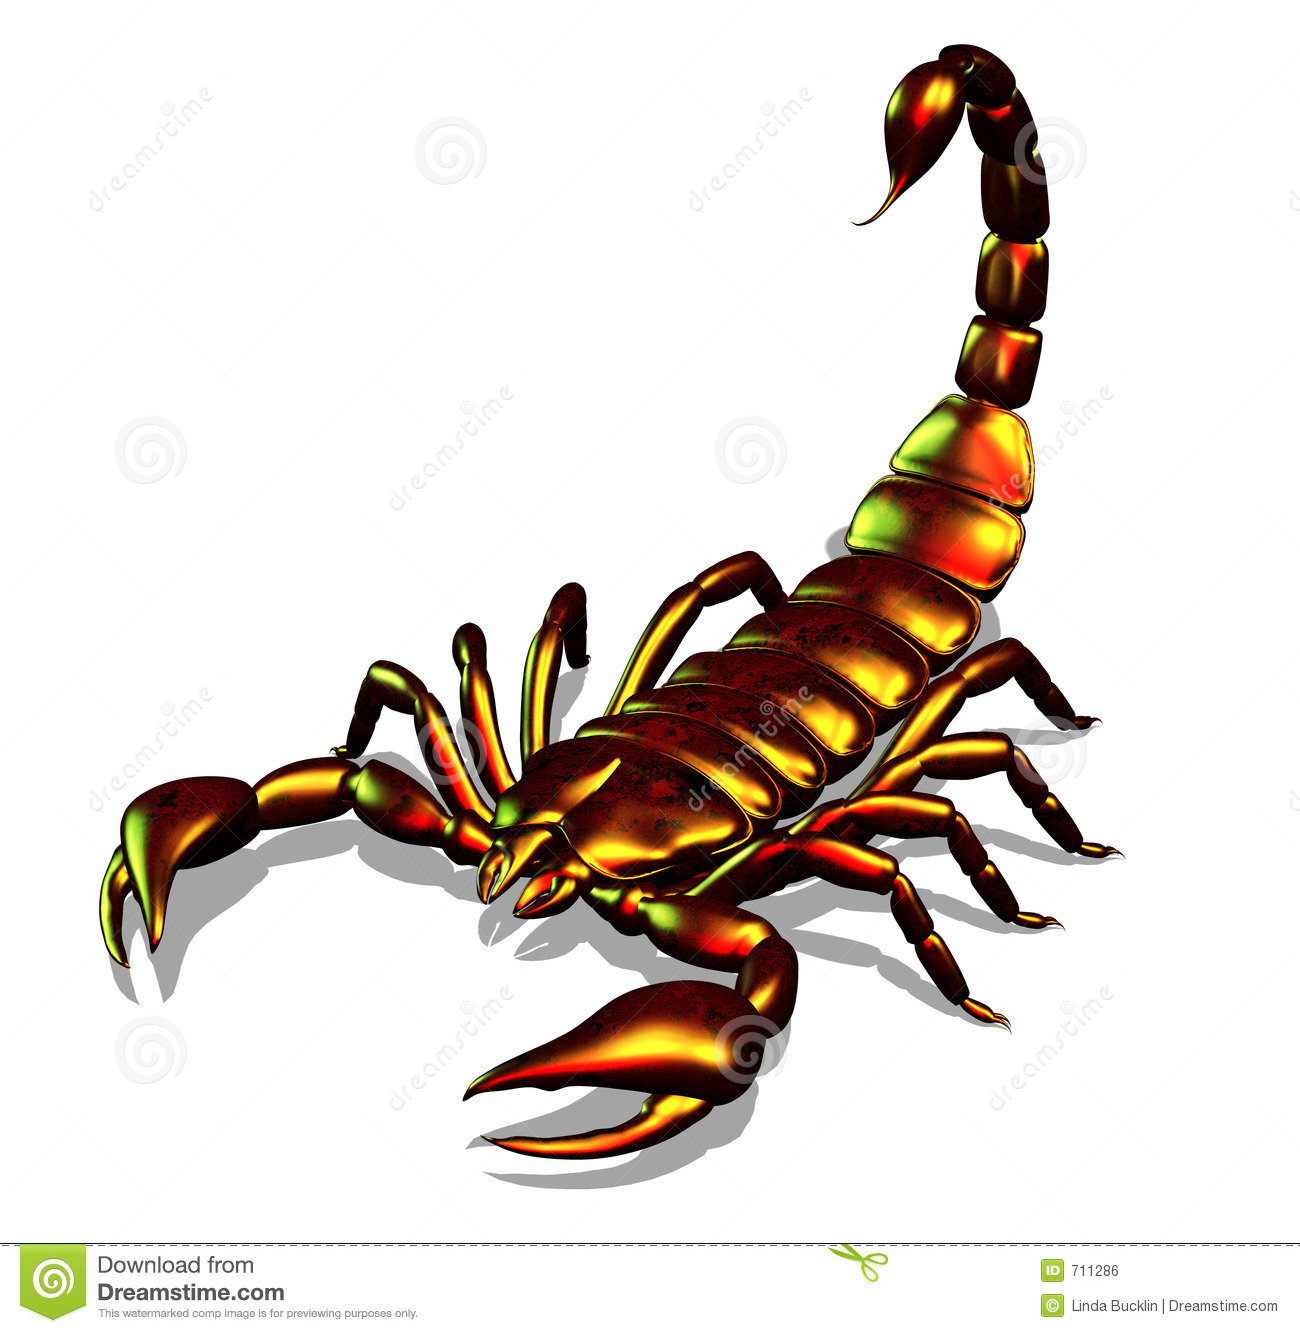 Scorpion backgrounds animals 